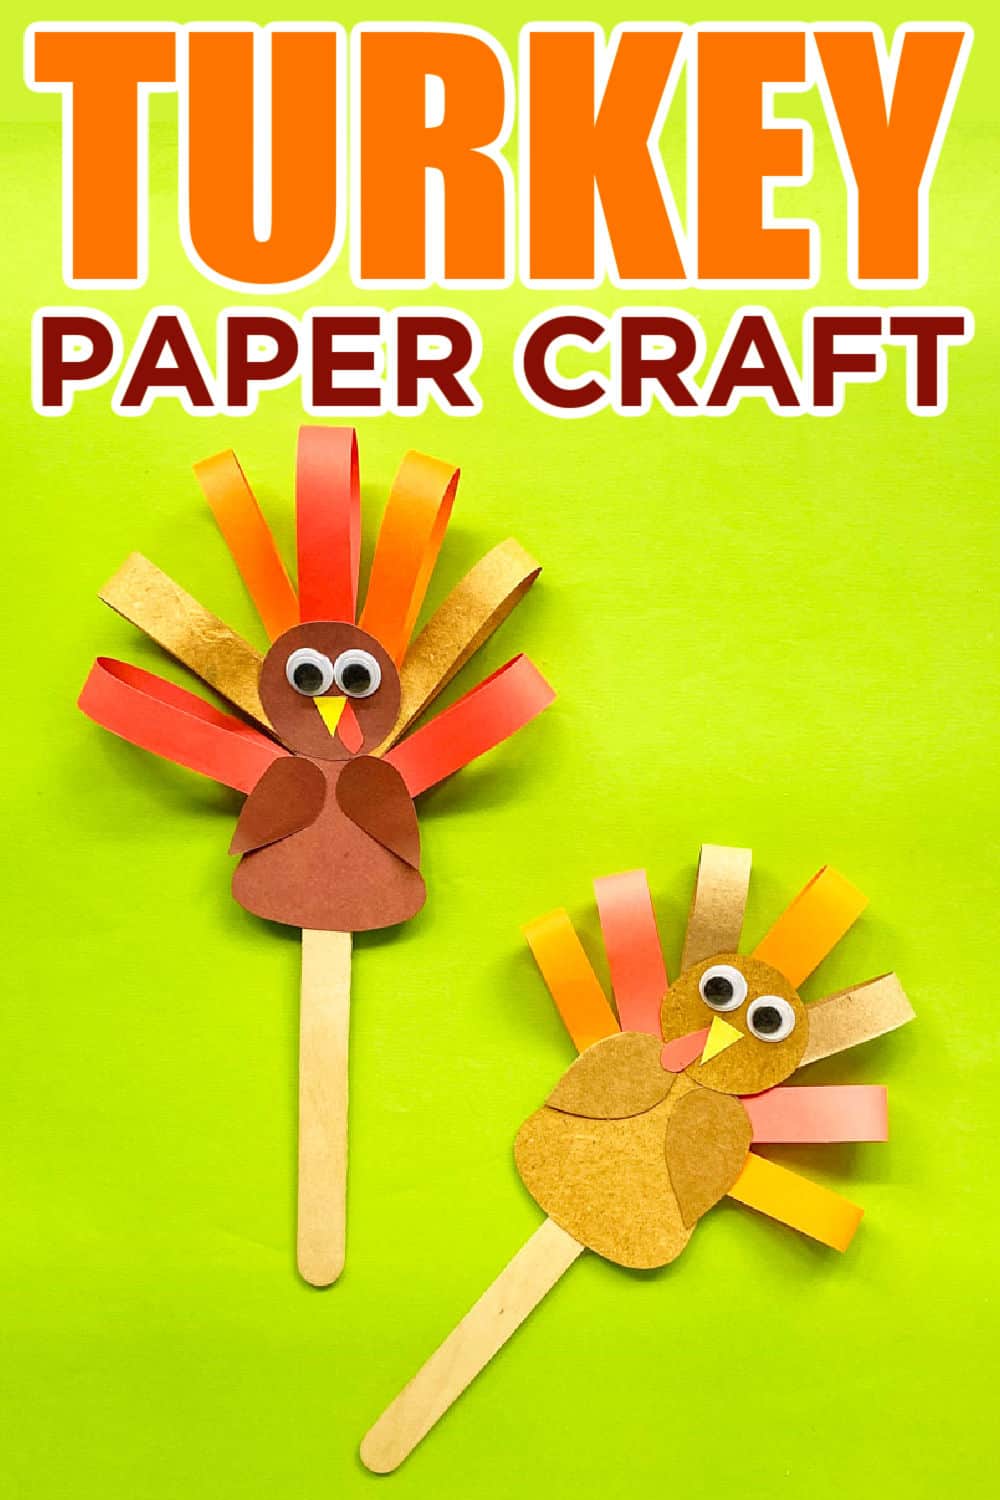 Paper Thanksgiving Craft